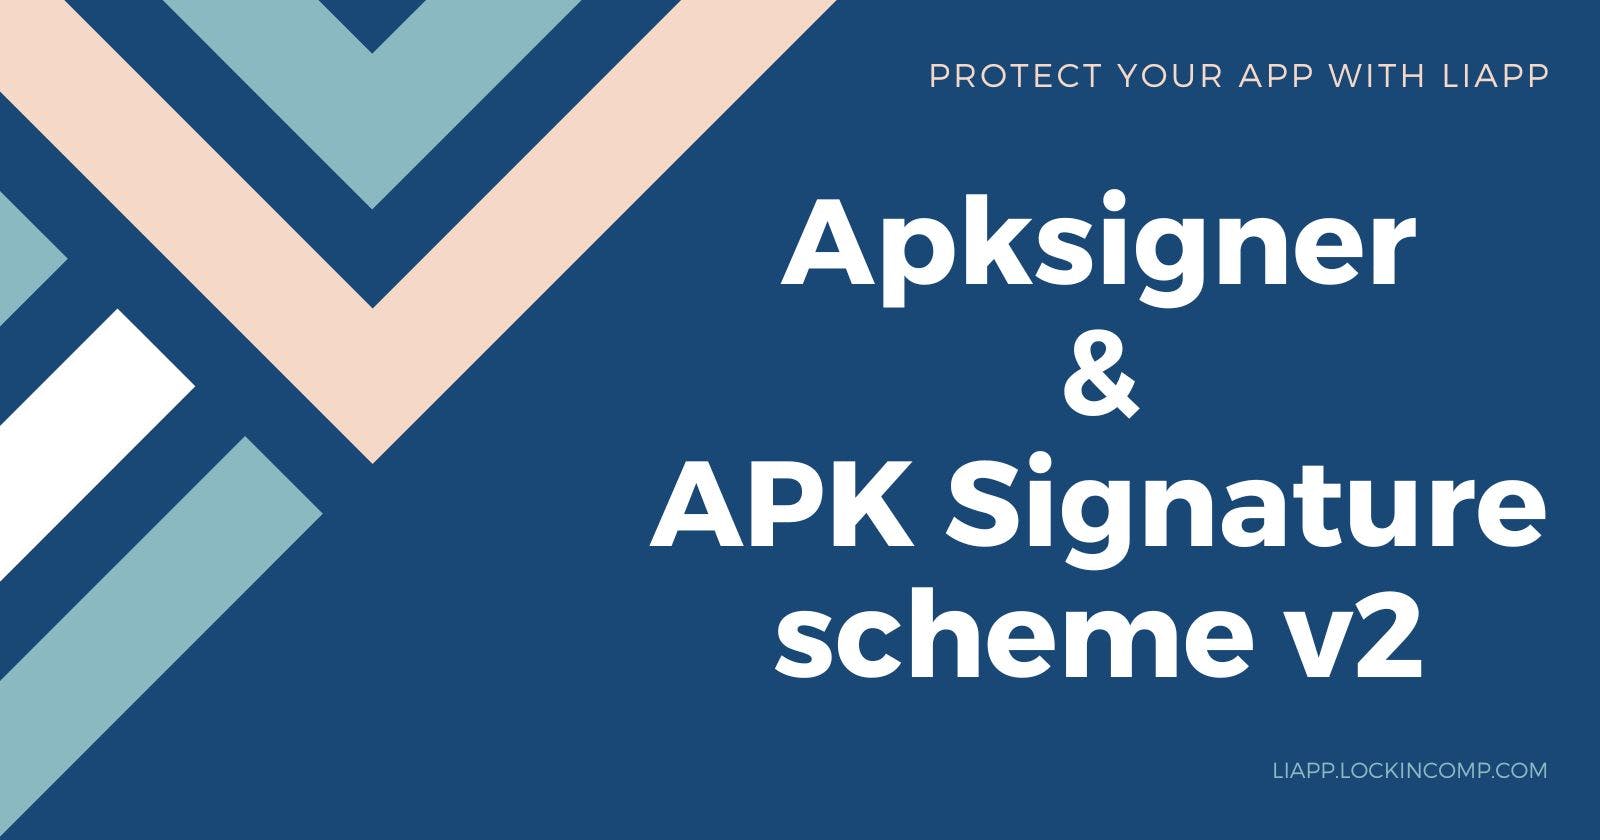 Signing with apksigner and APK Signature scheme v2